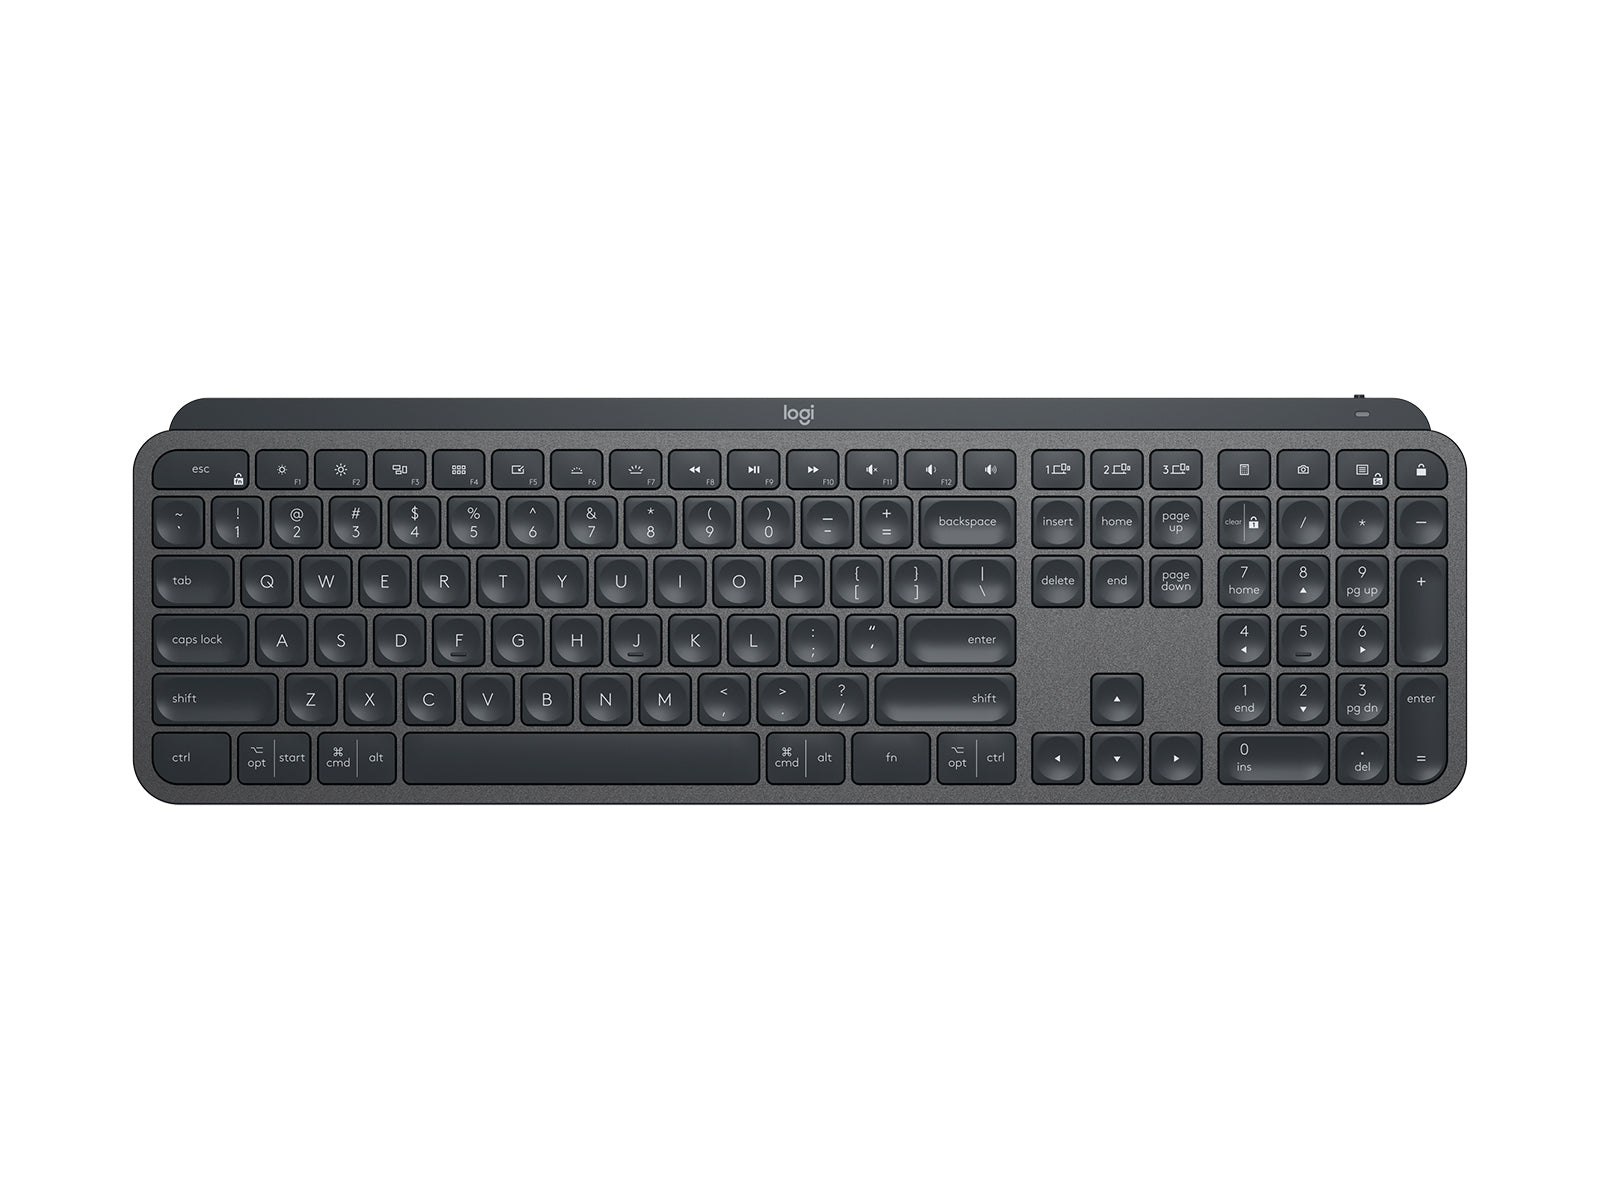 Logitech MX Keys kabellose wiederaufladbare beleuchtete Tastatur (920-009294) Monitors.com